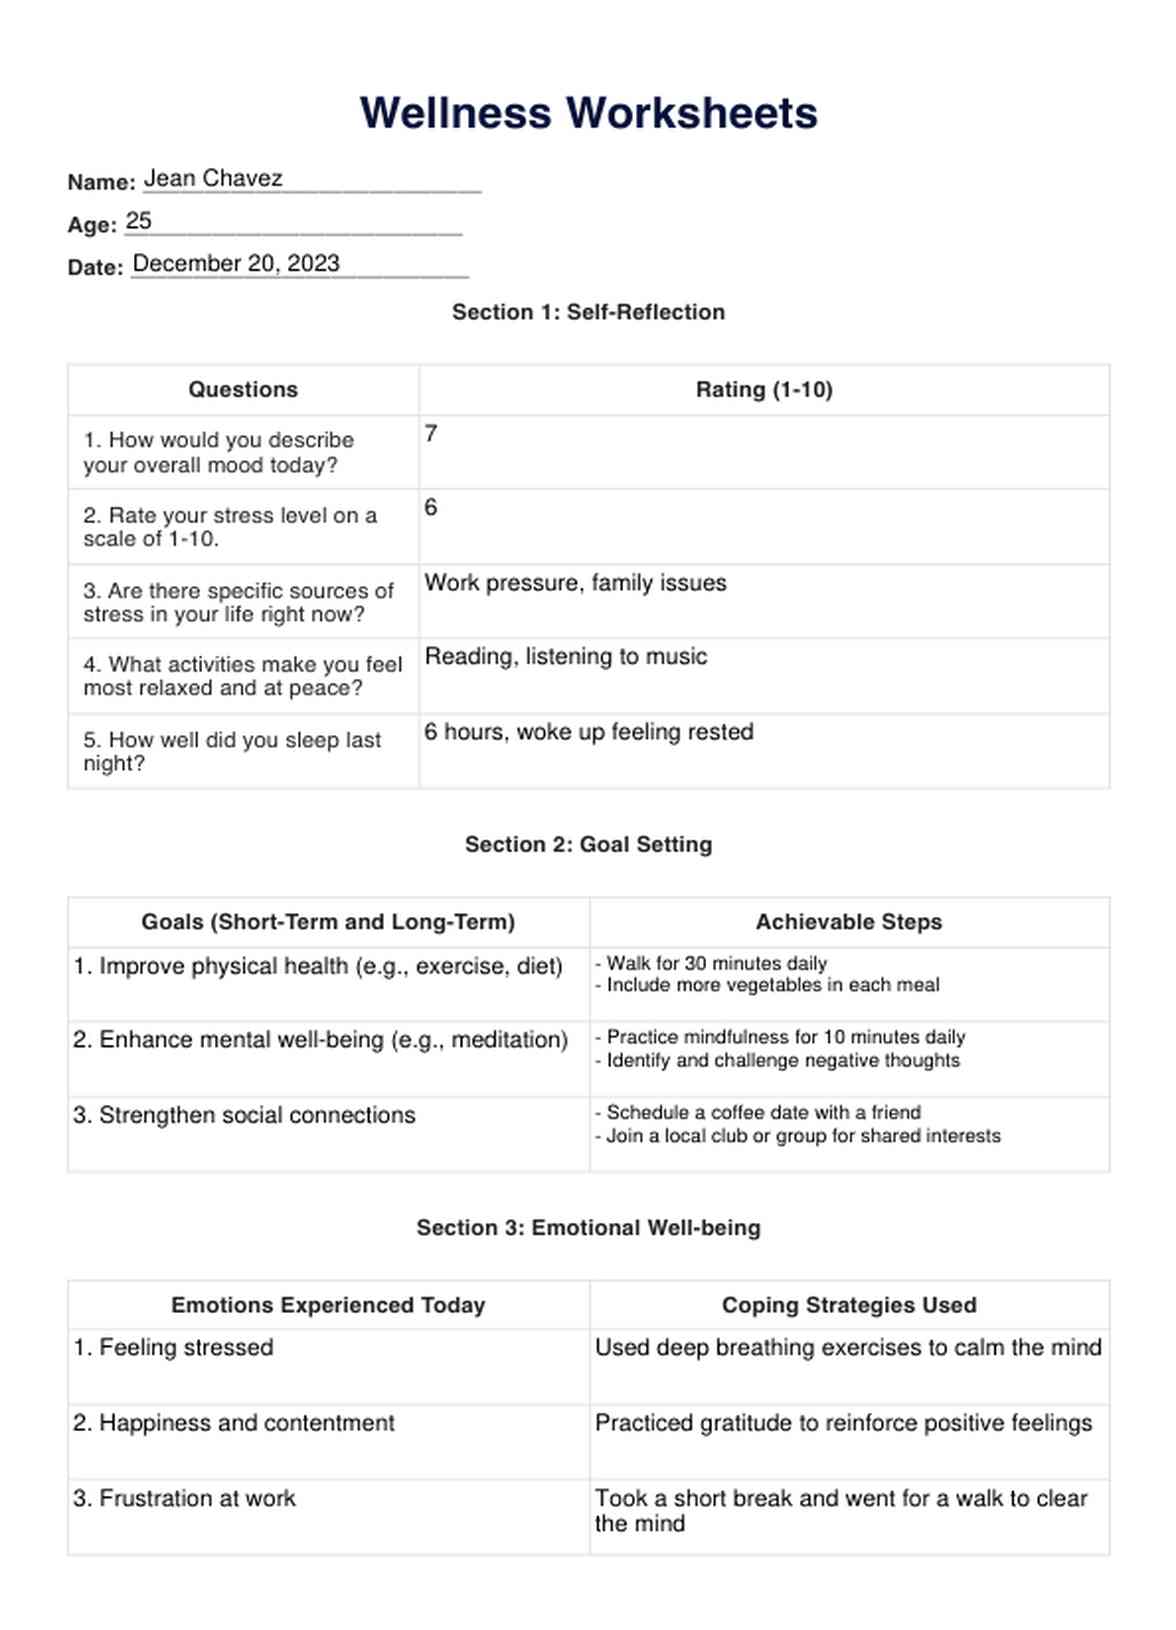 Wellness Worksheets PDF Example